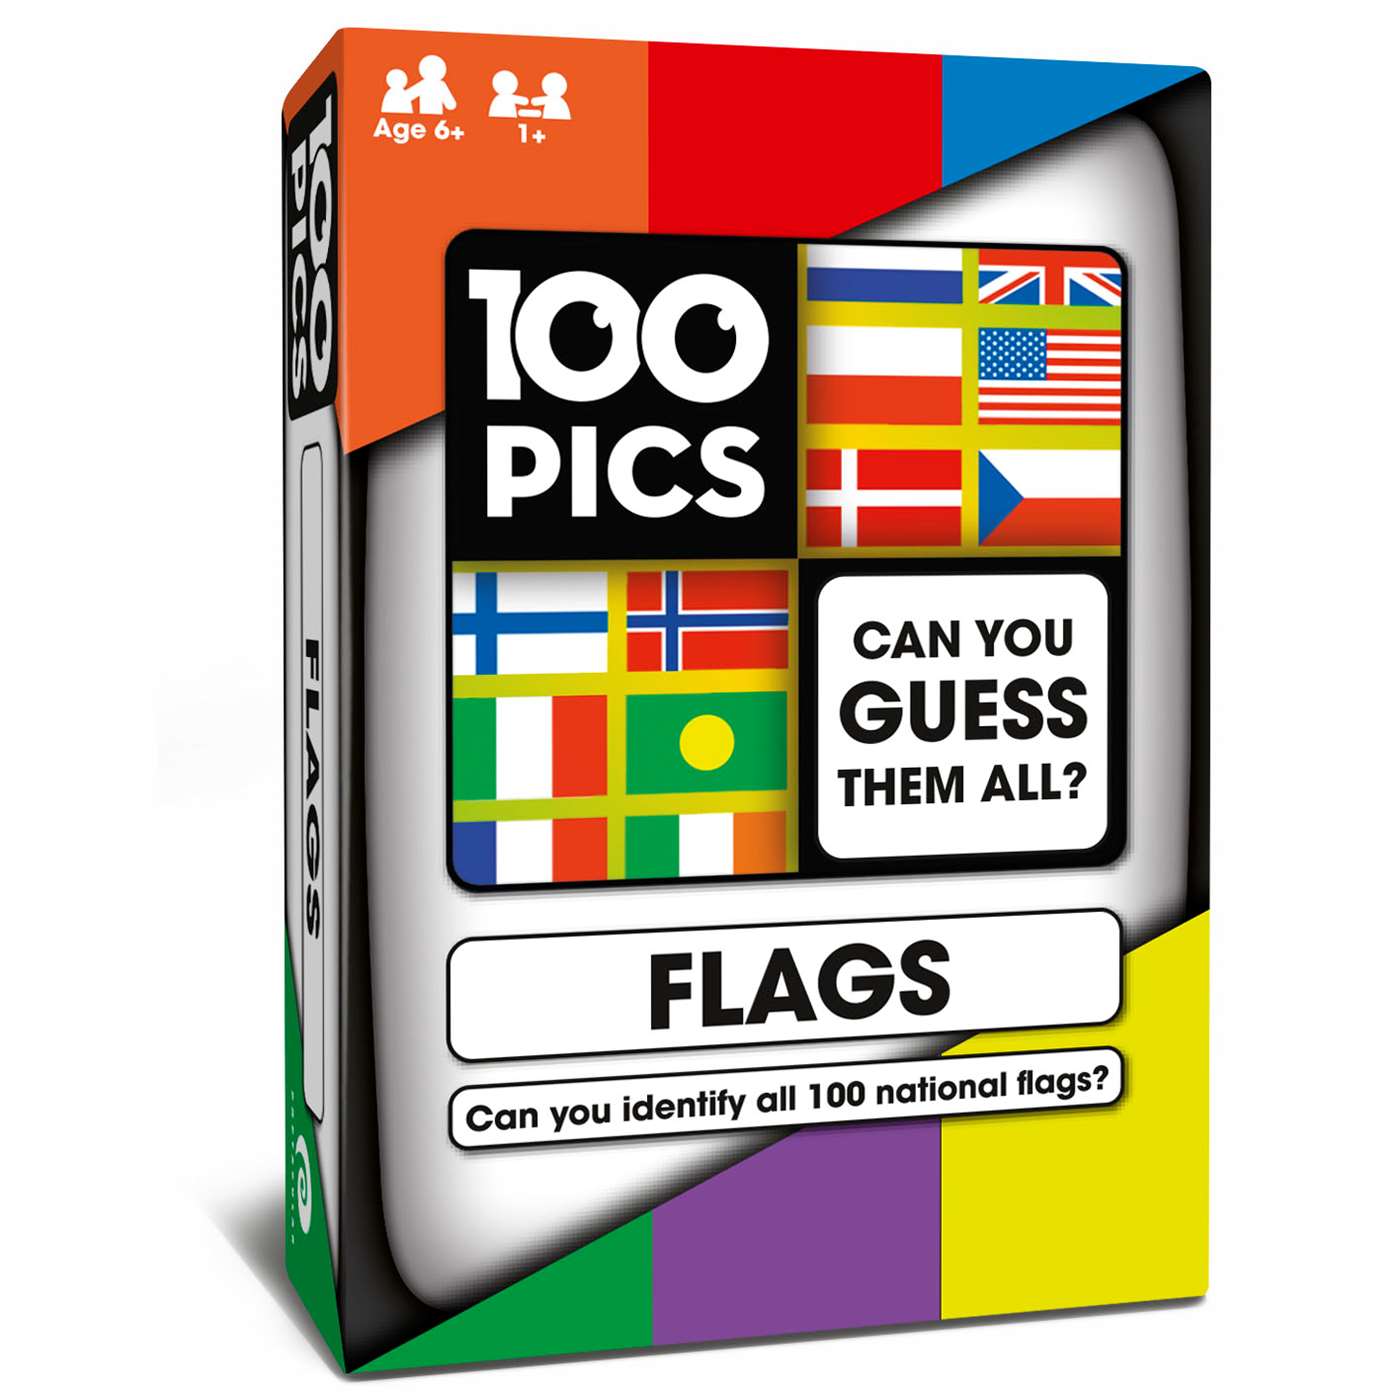 100 PICS - FLAGS Image